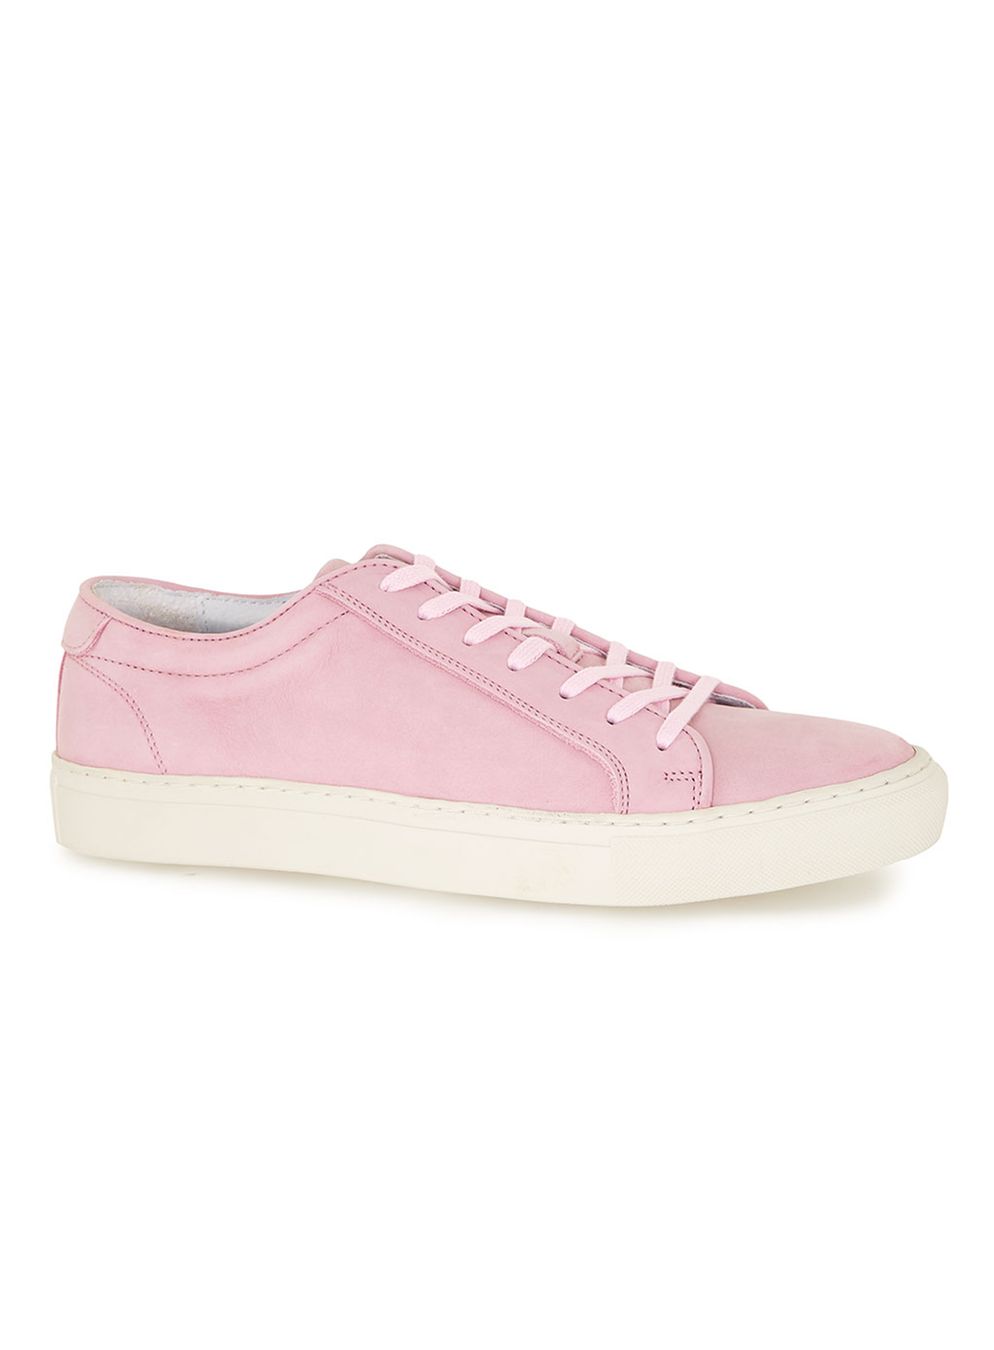 topman_pink sneaker